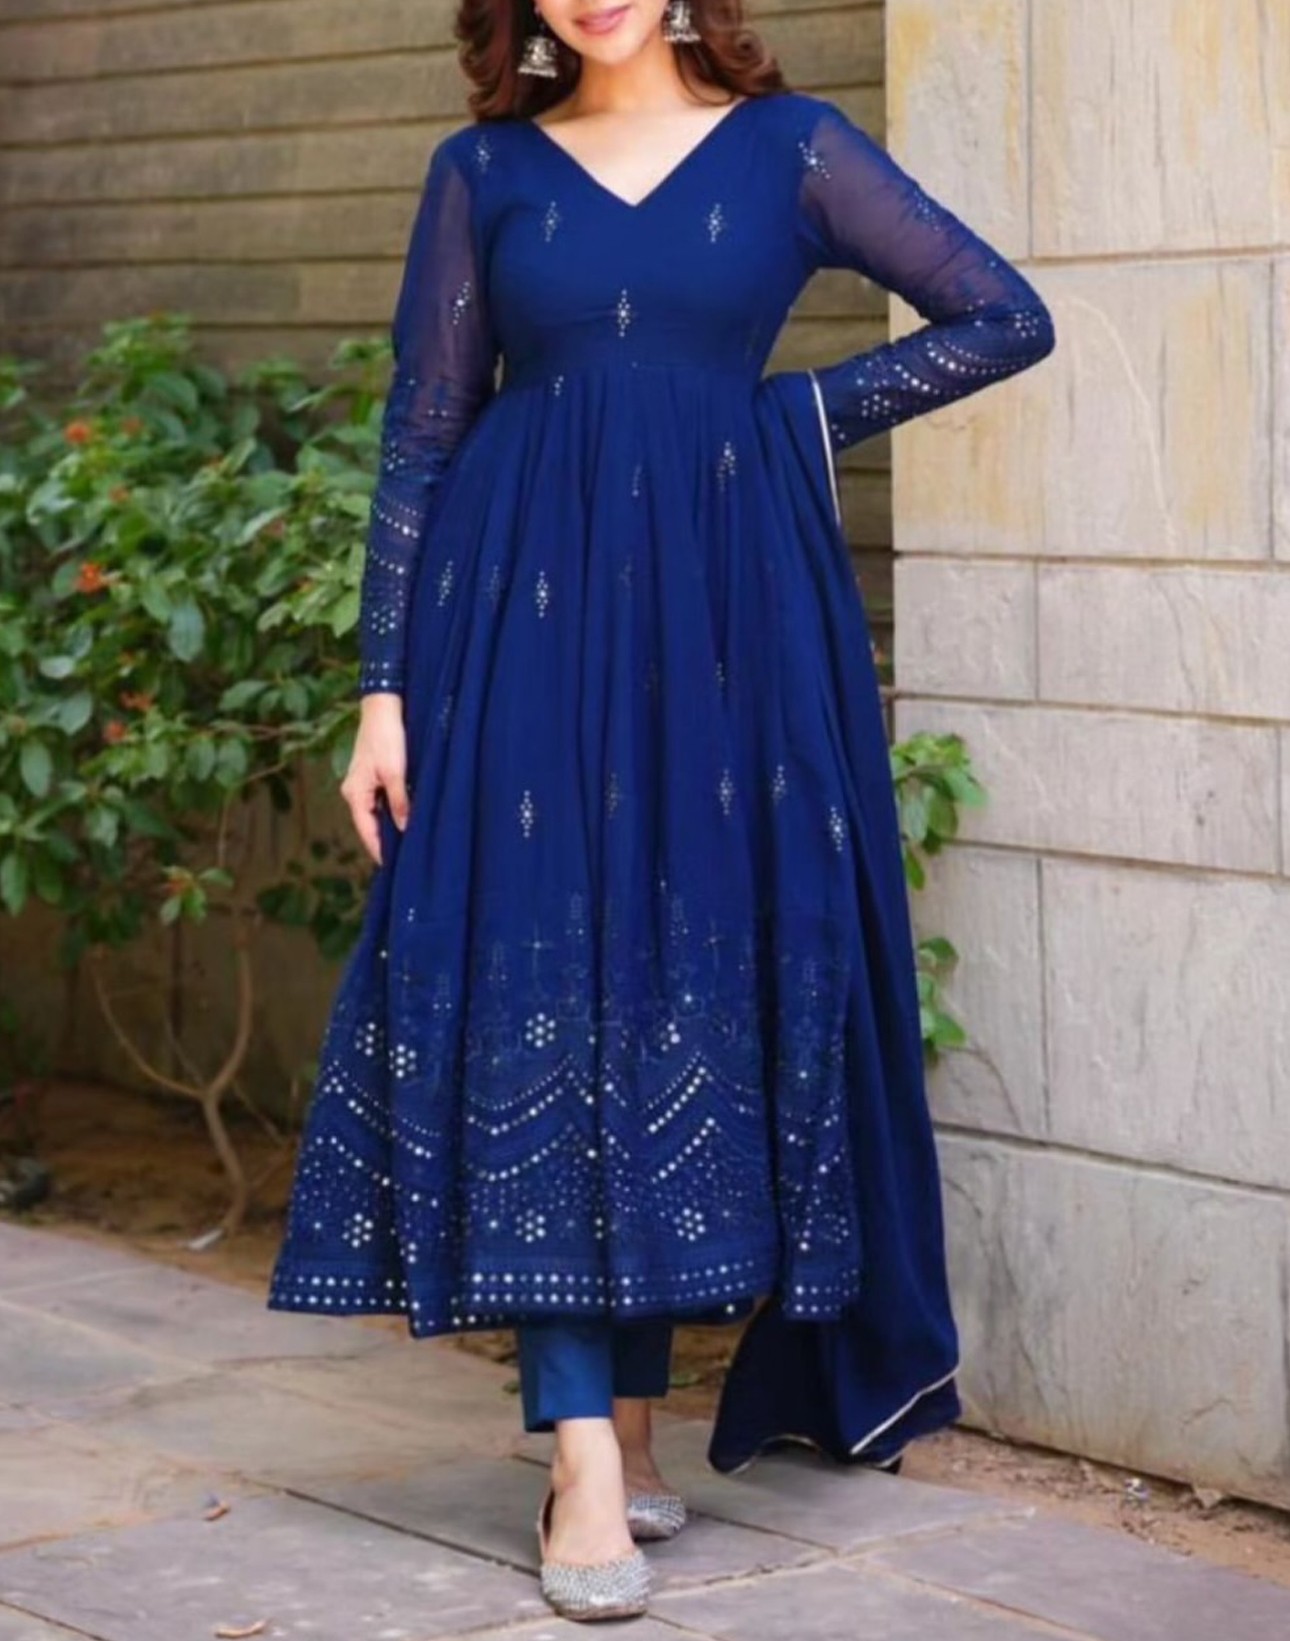 3 Piece Royal Blue/Gold AnarKali Dress Indian/Pakistani-Small  Size-Party/Casual | eBay